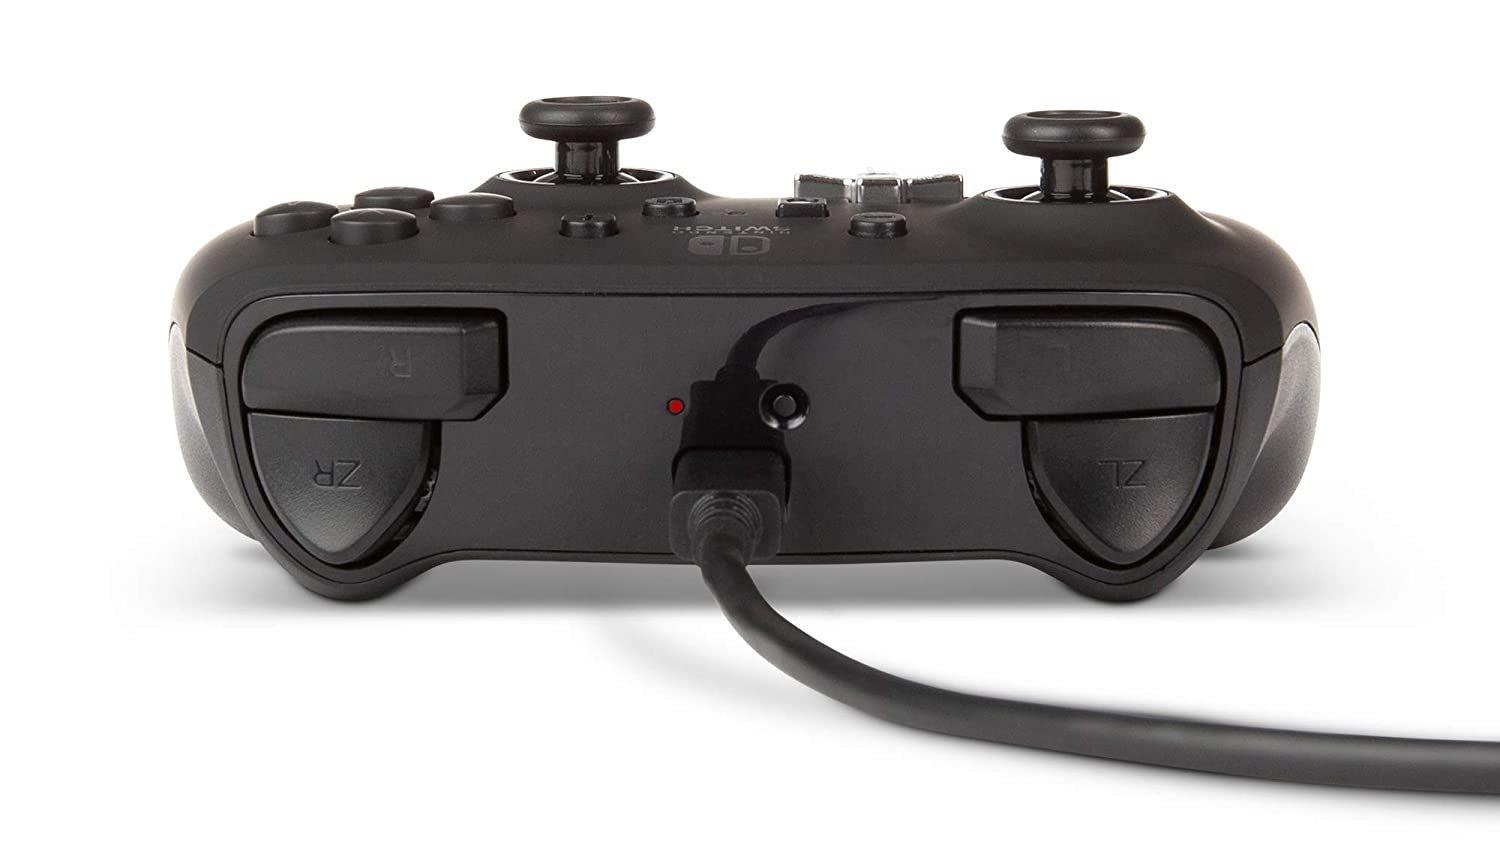 PowerA Enhanced Wireless Controller for Nintendo Switch Black